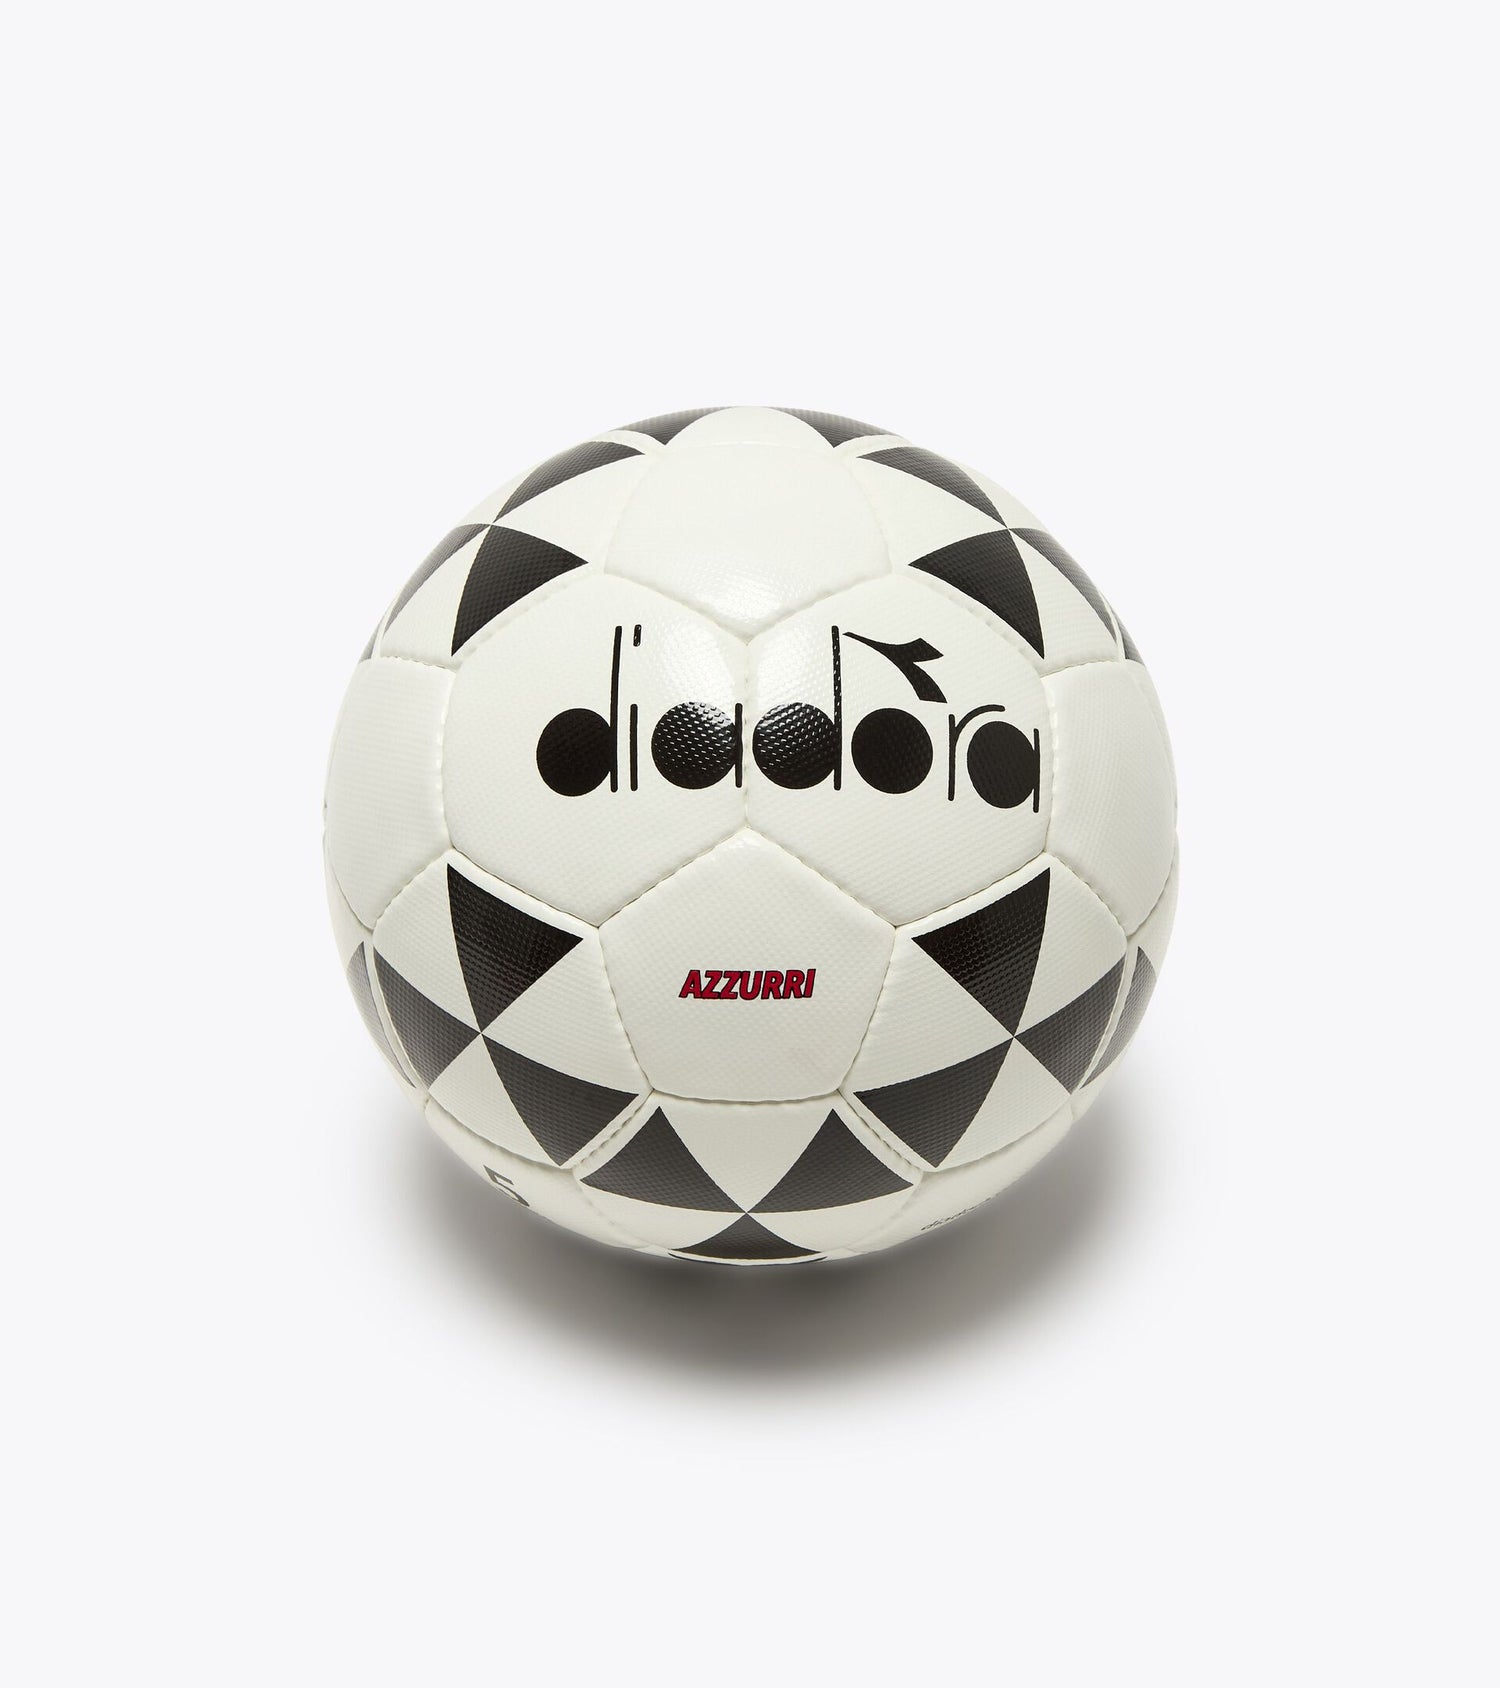 Diadora Azzurri Soccer Ball